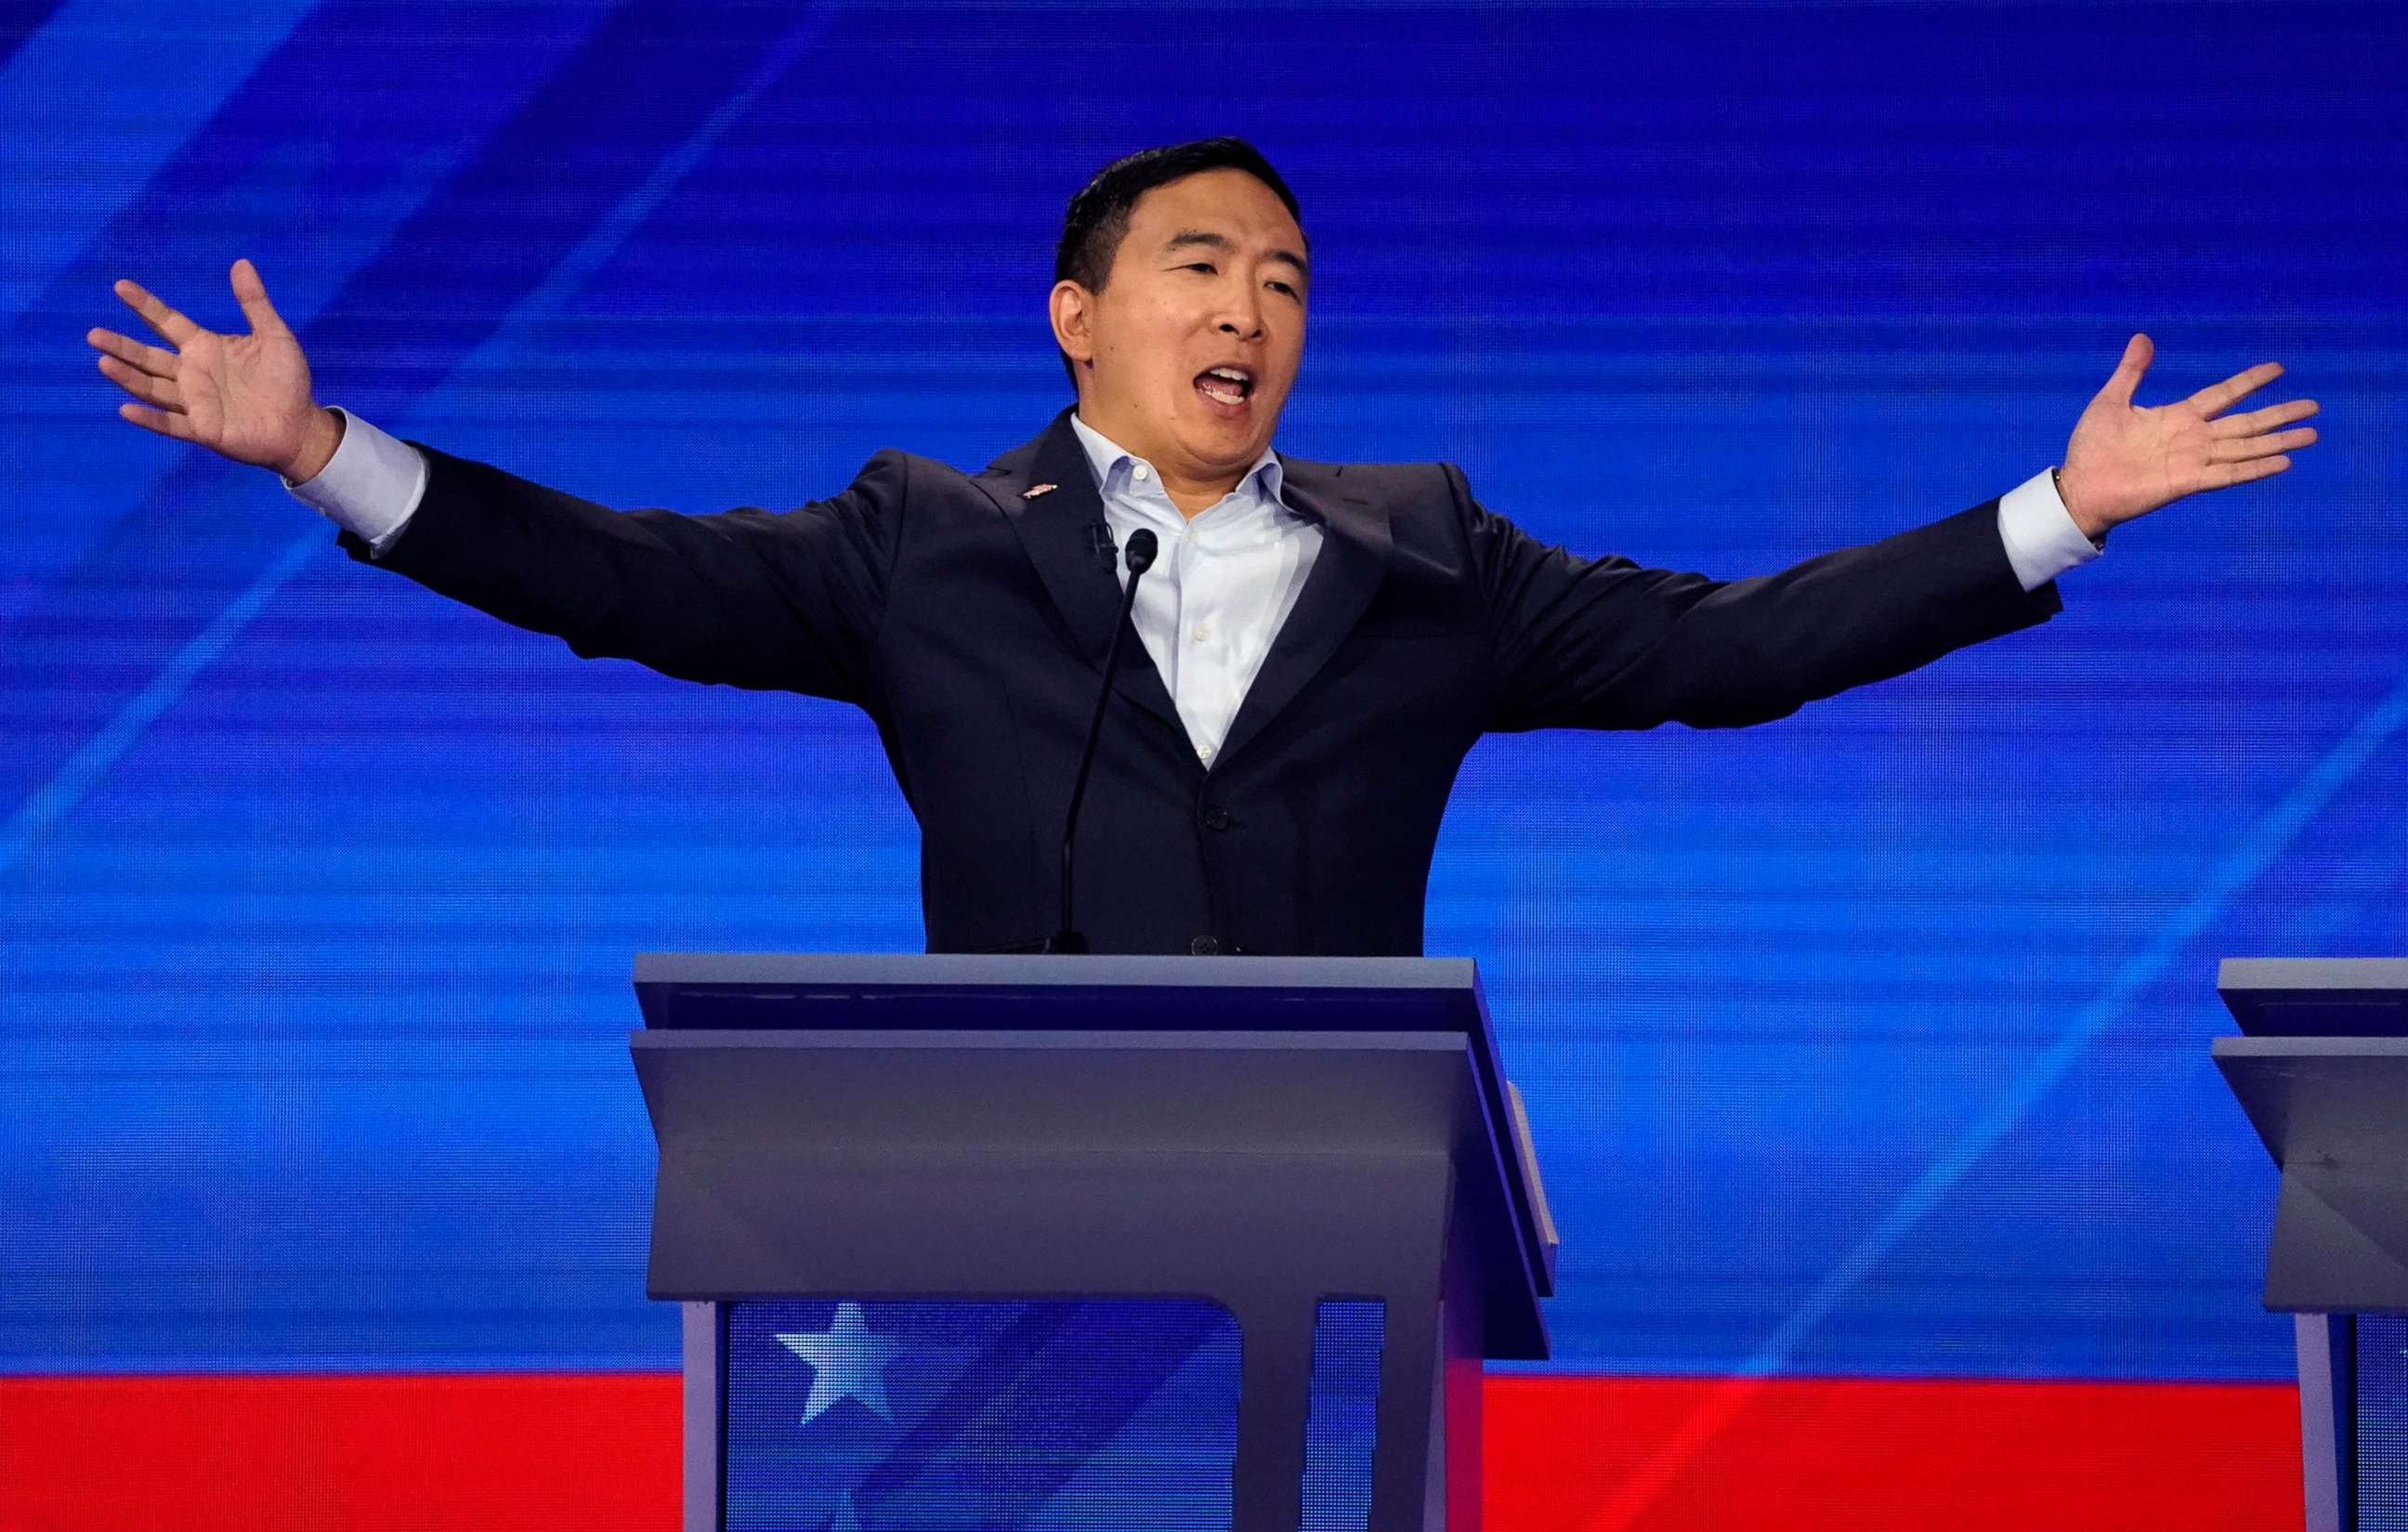 PHOTO: Entrepreneur Andrew Yang reacts during the 2020 Democratic presidential debate in Houston, Sept. 12, 2019.